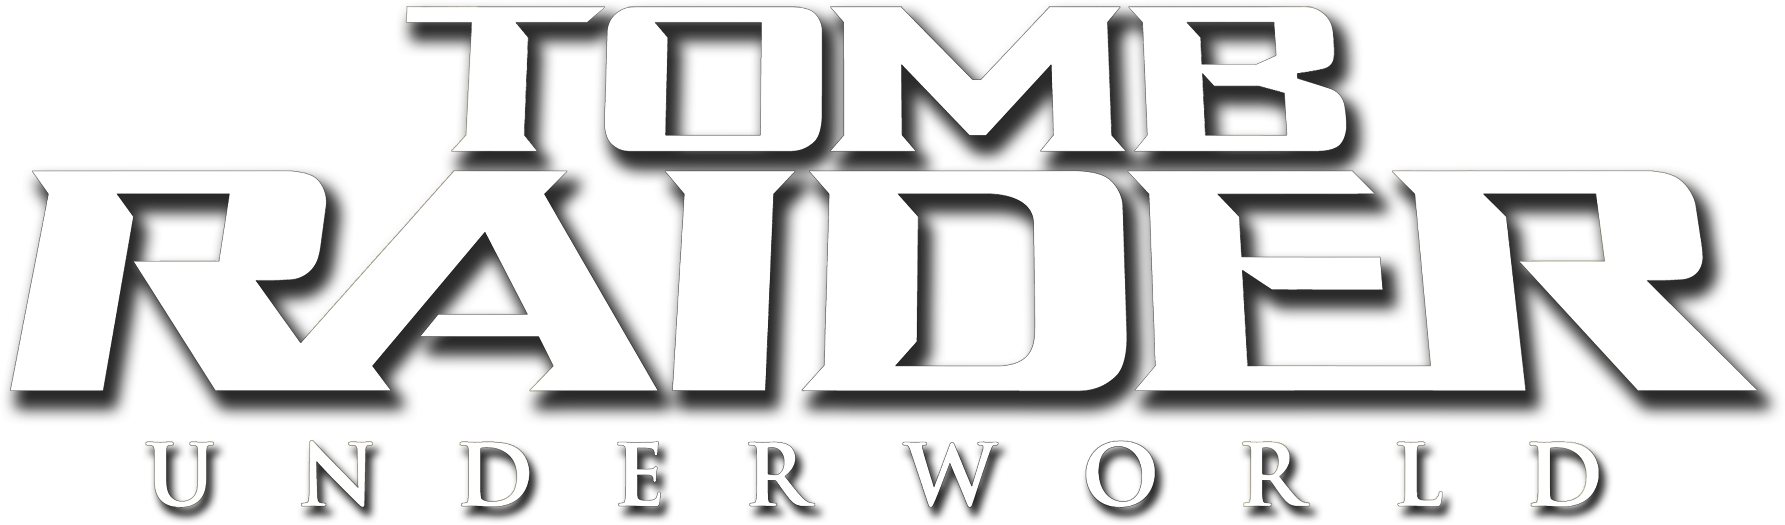 Tomb Raider Logo PNG HD Image